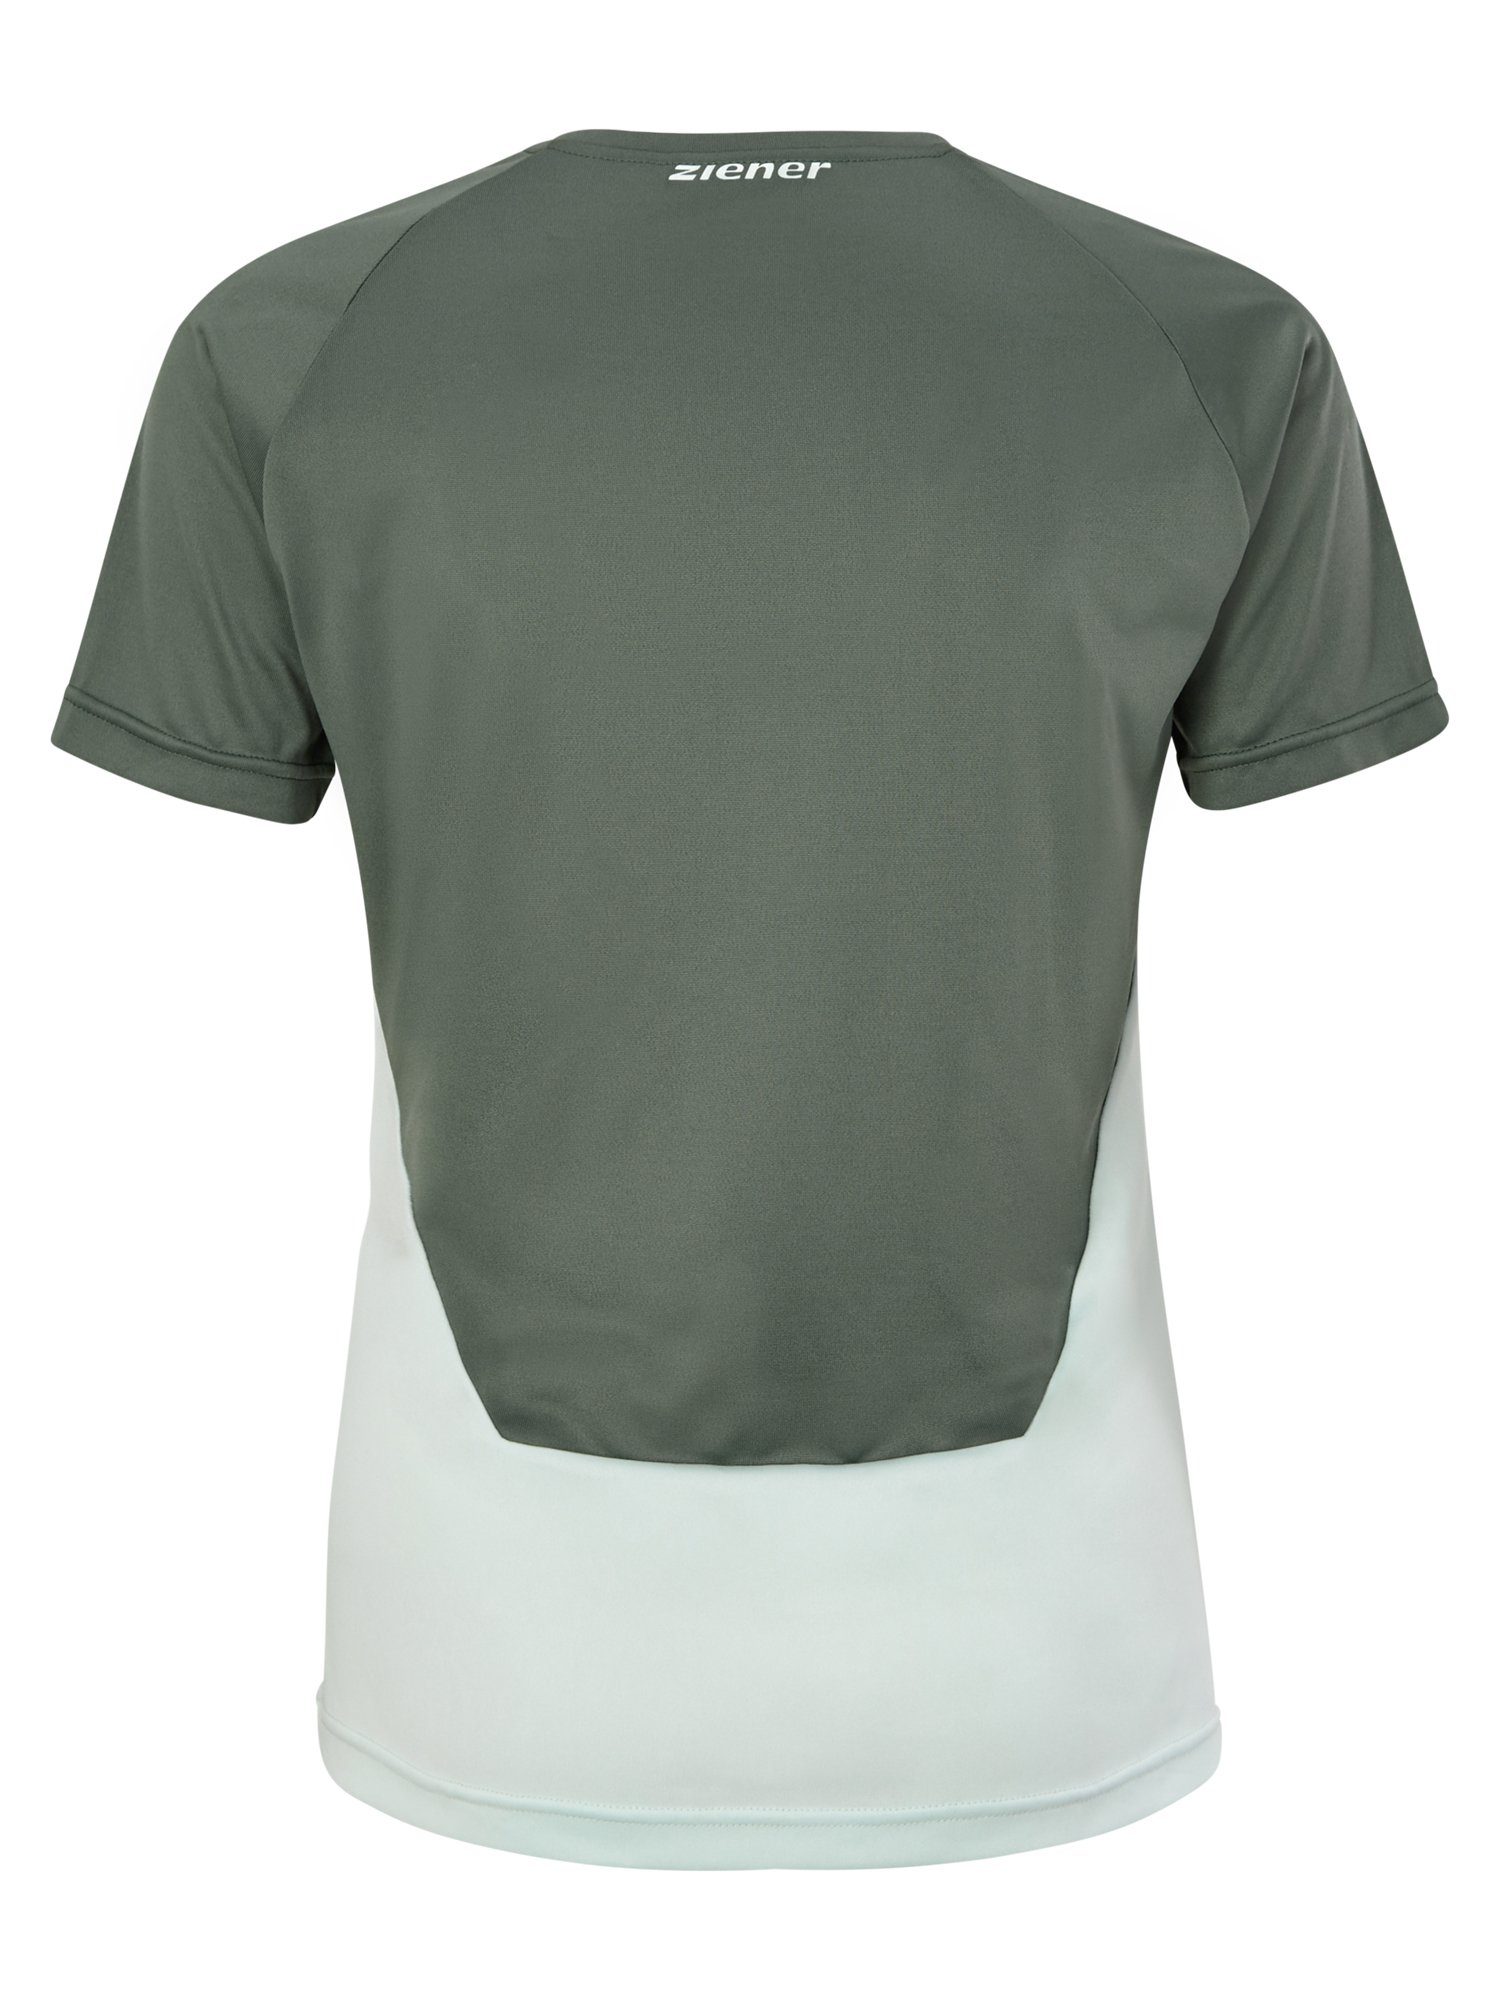 NABUCA Ziener olivgrün T-Shirt